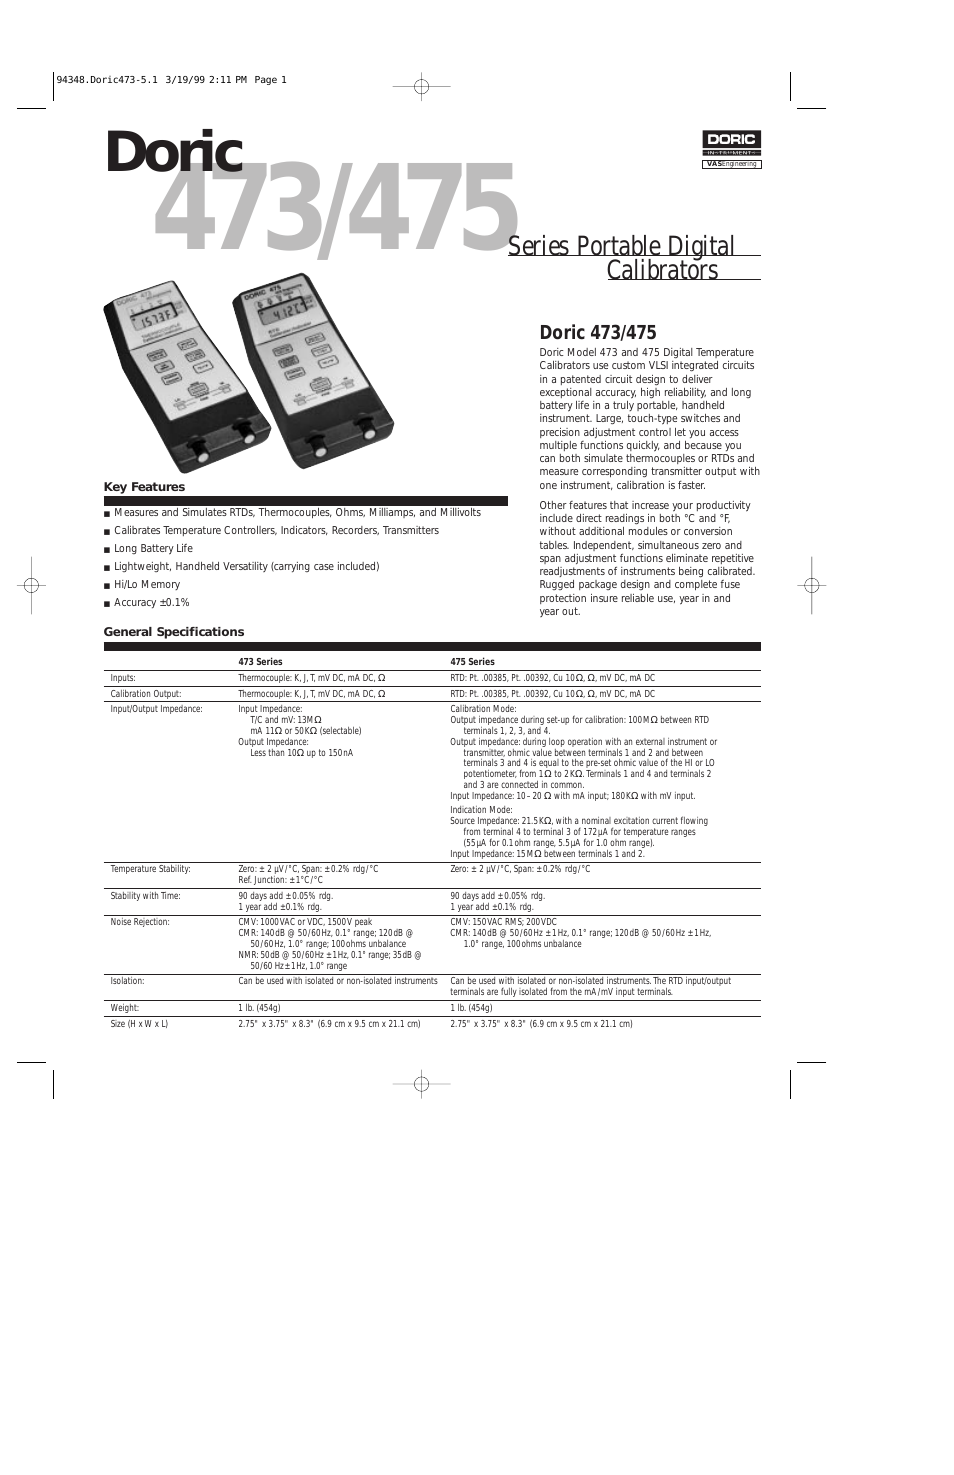 473 Series Portable Digital Calibrators